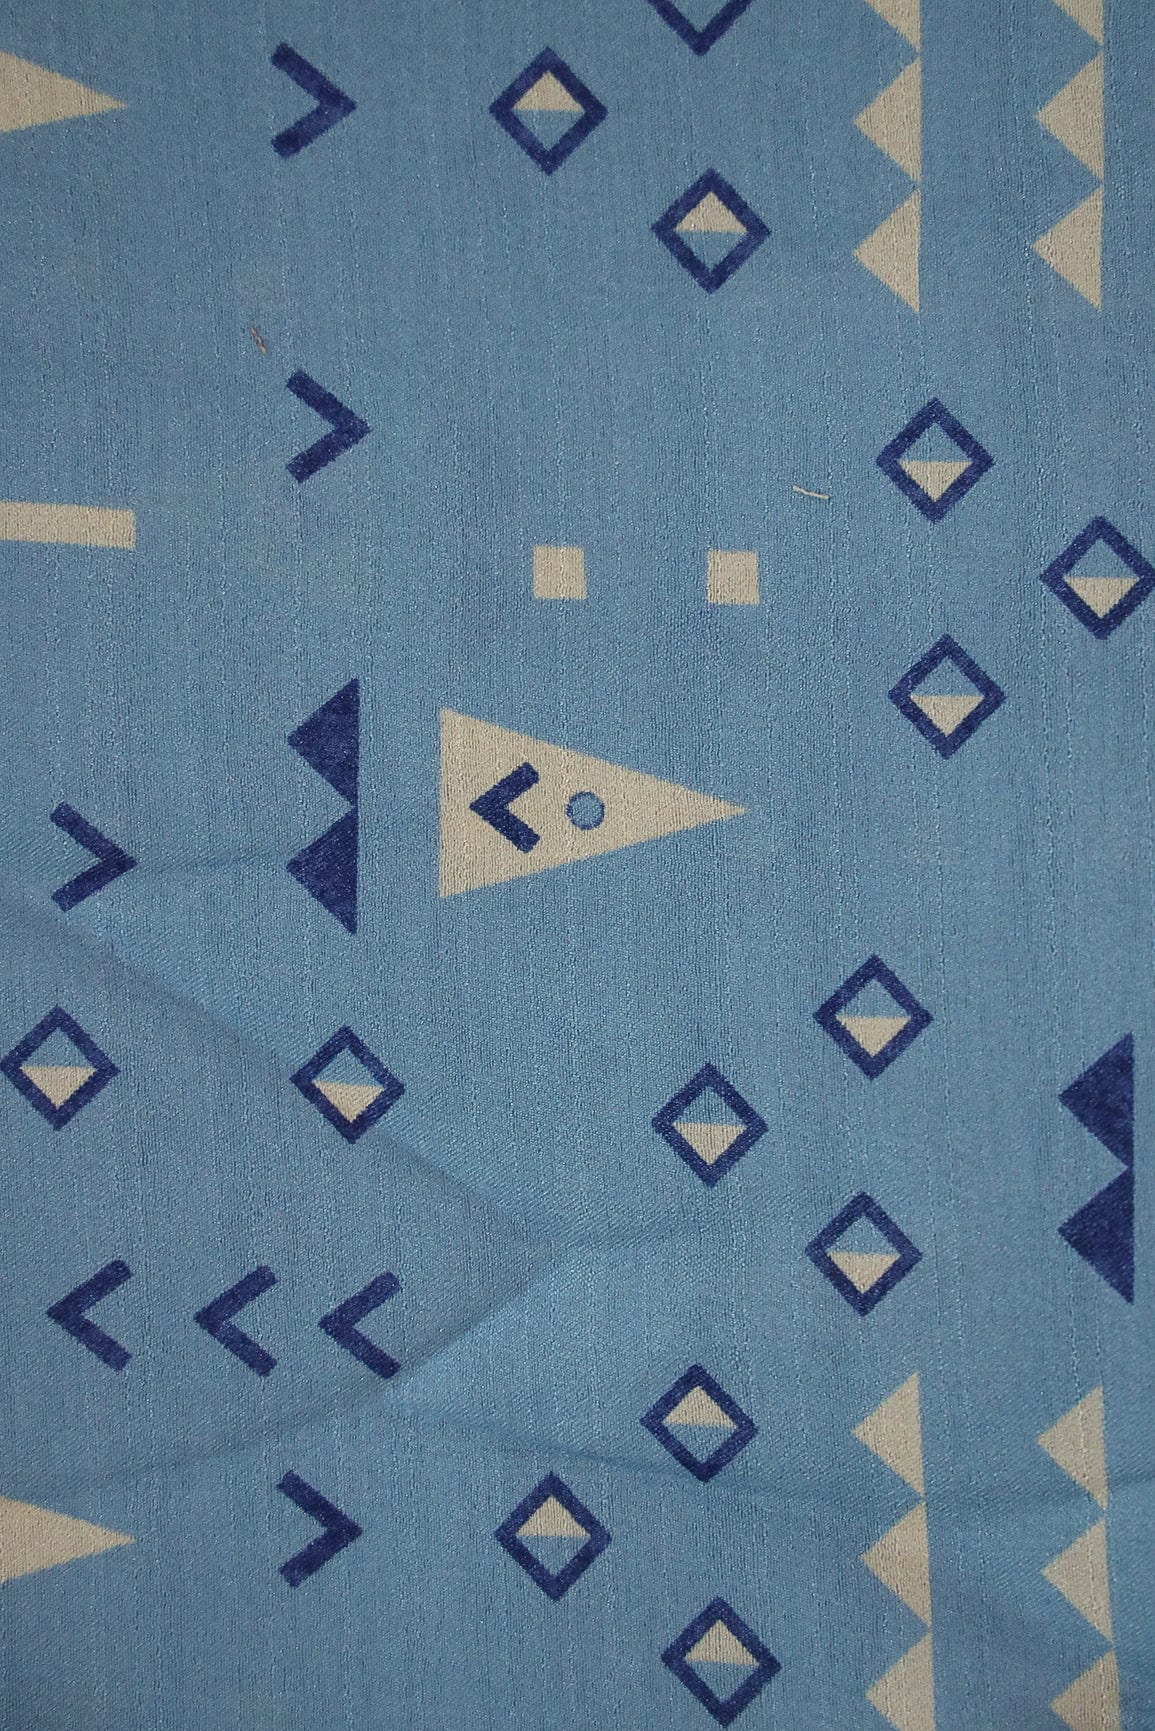 doeraa Prints Sky Blue Geometric Digital Print on Tussar Satin Fabric